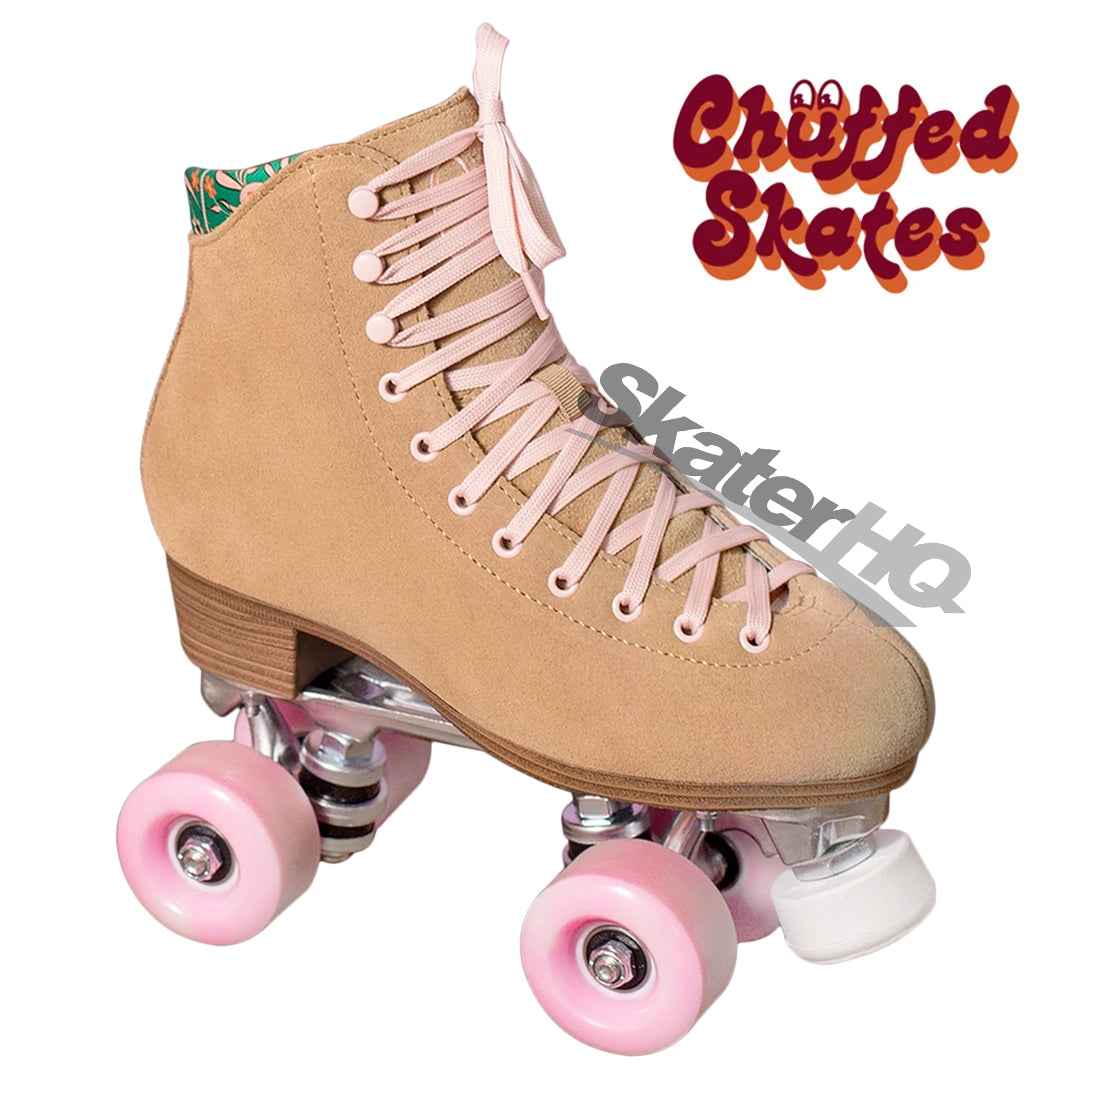 Chuffed Crew Iced Coffee 6US Roller Skates